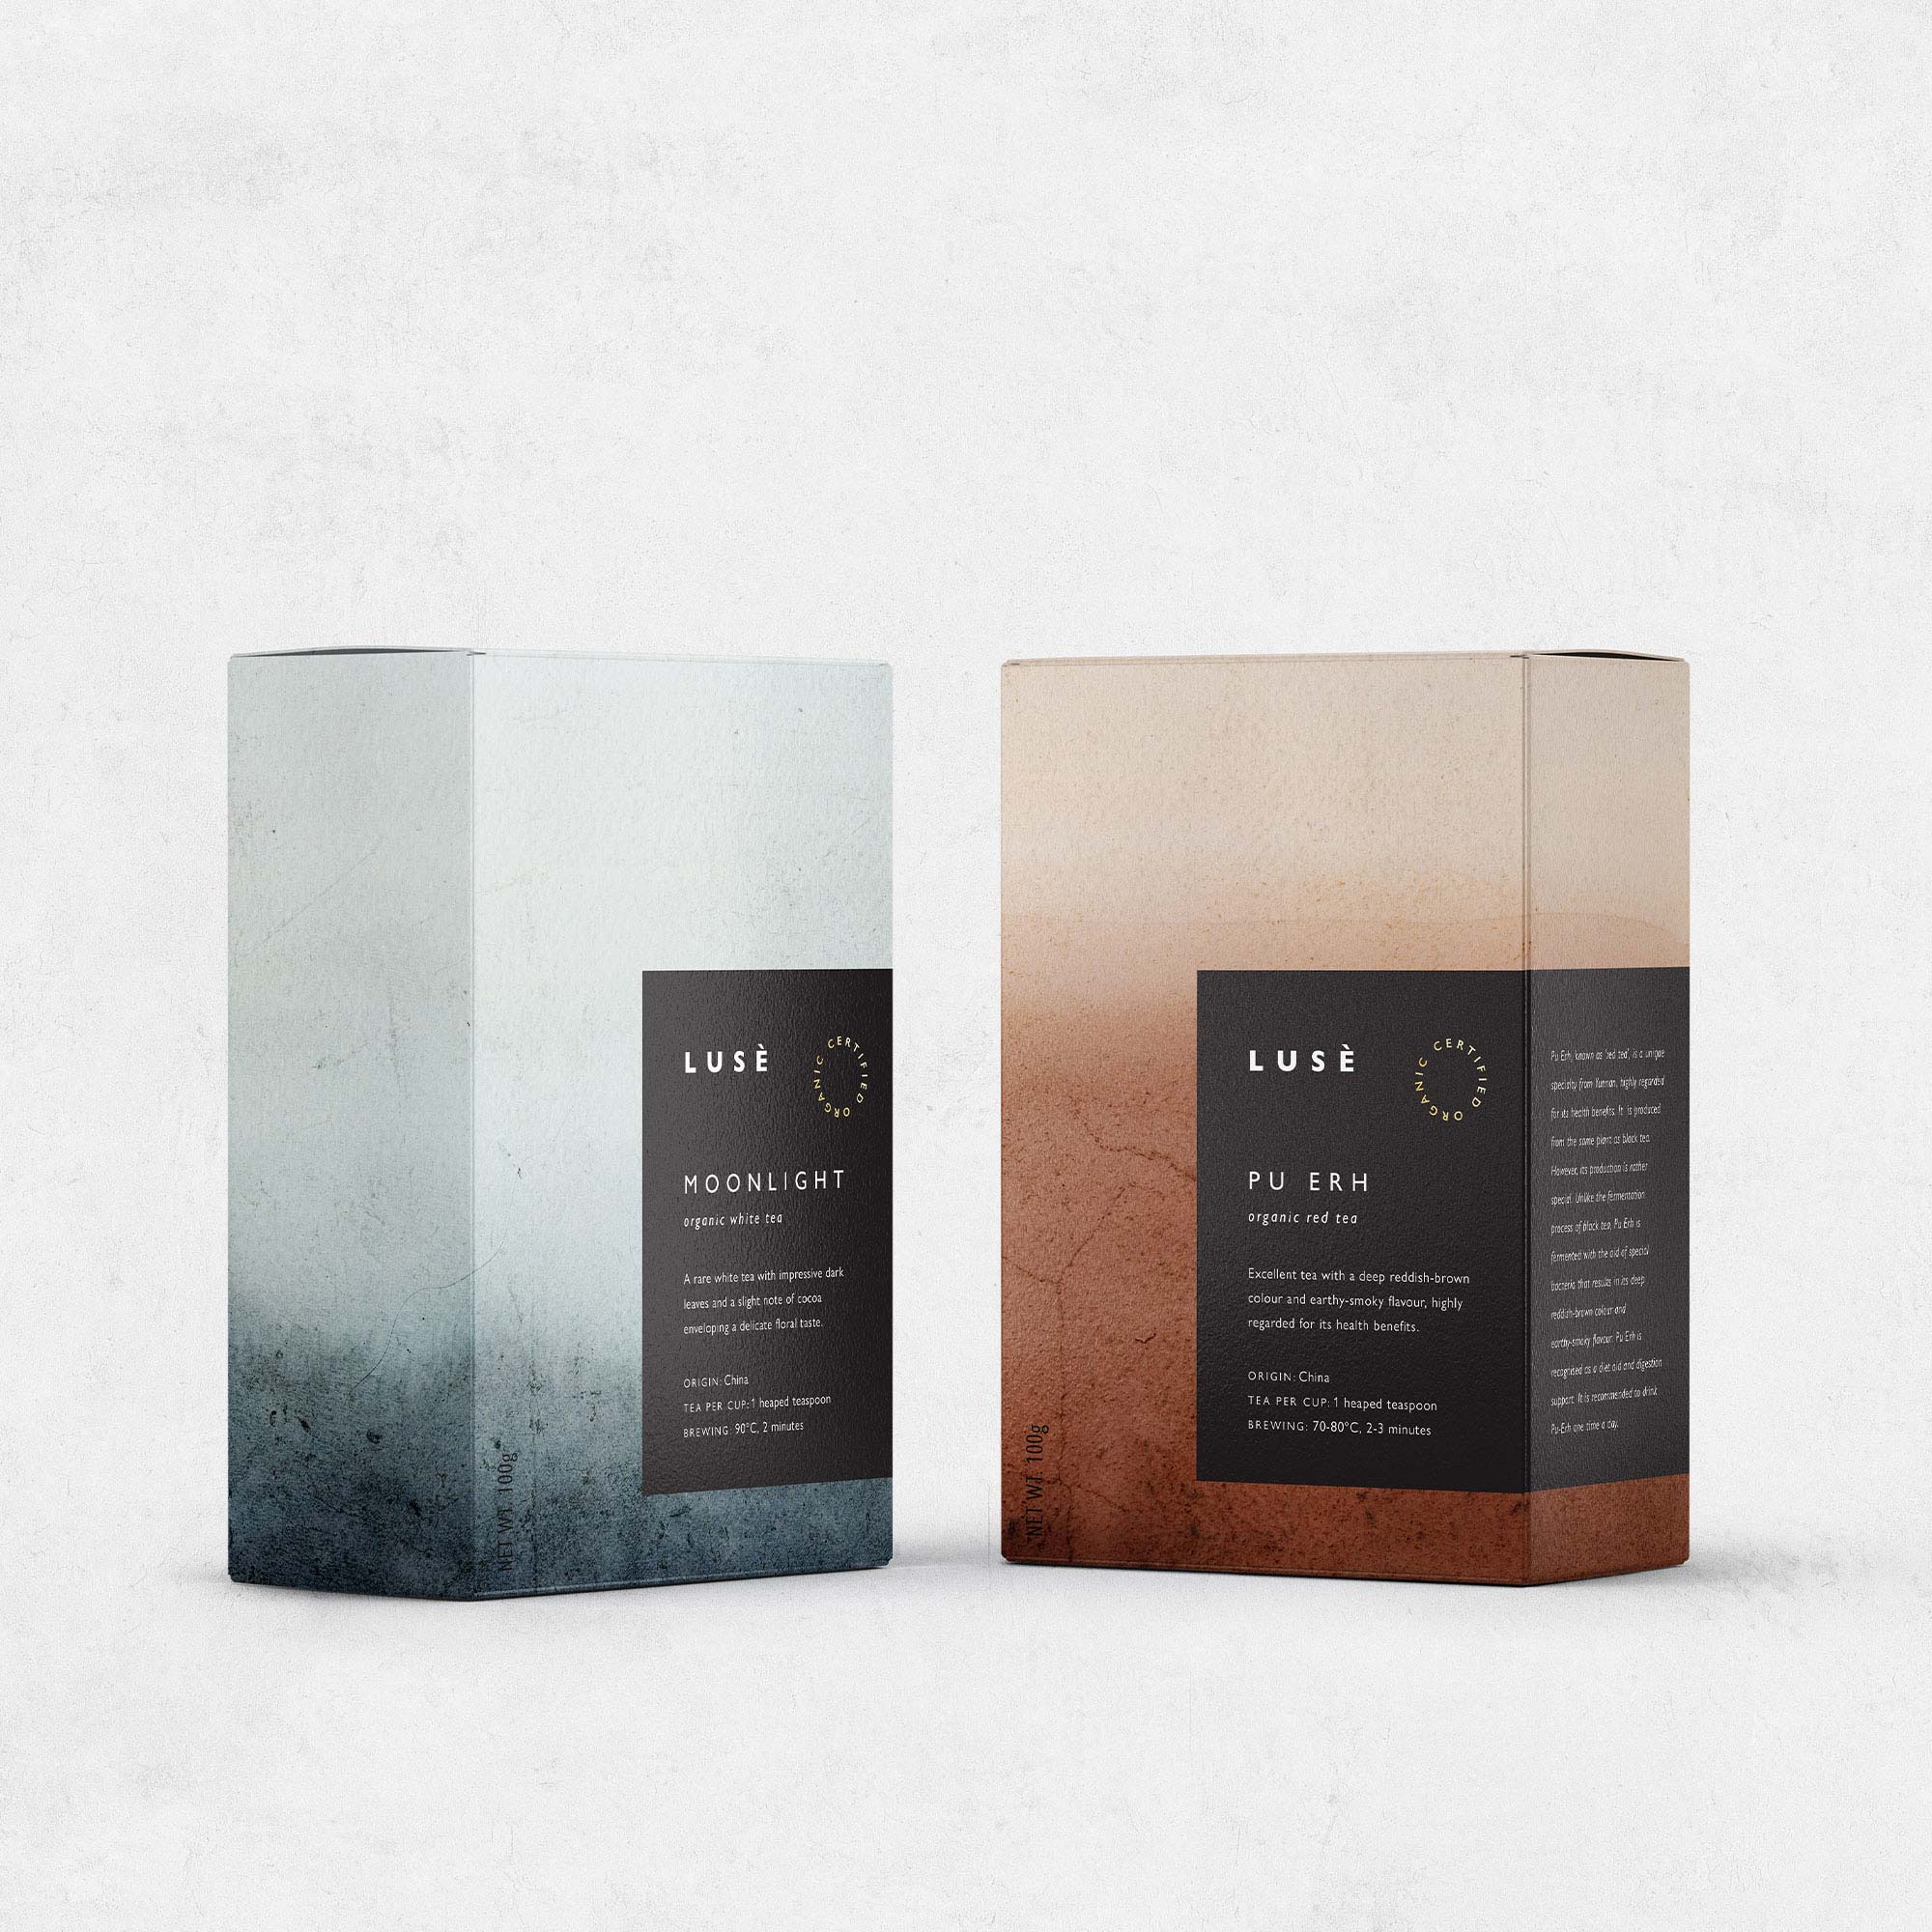 Karolina Król Studio minimalist packaging design inspired by abstract art